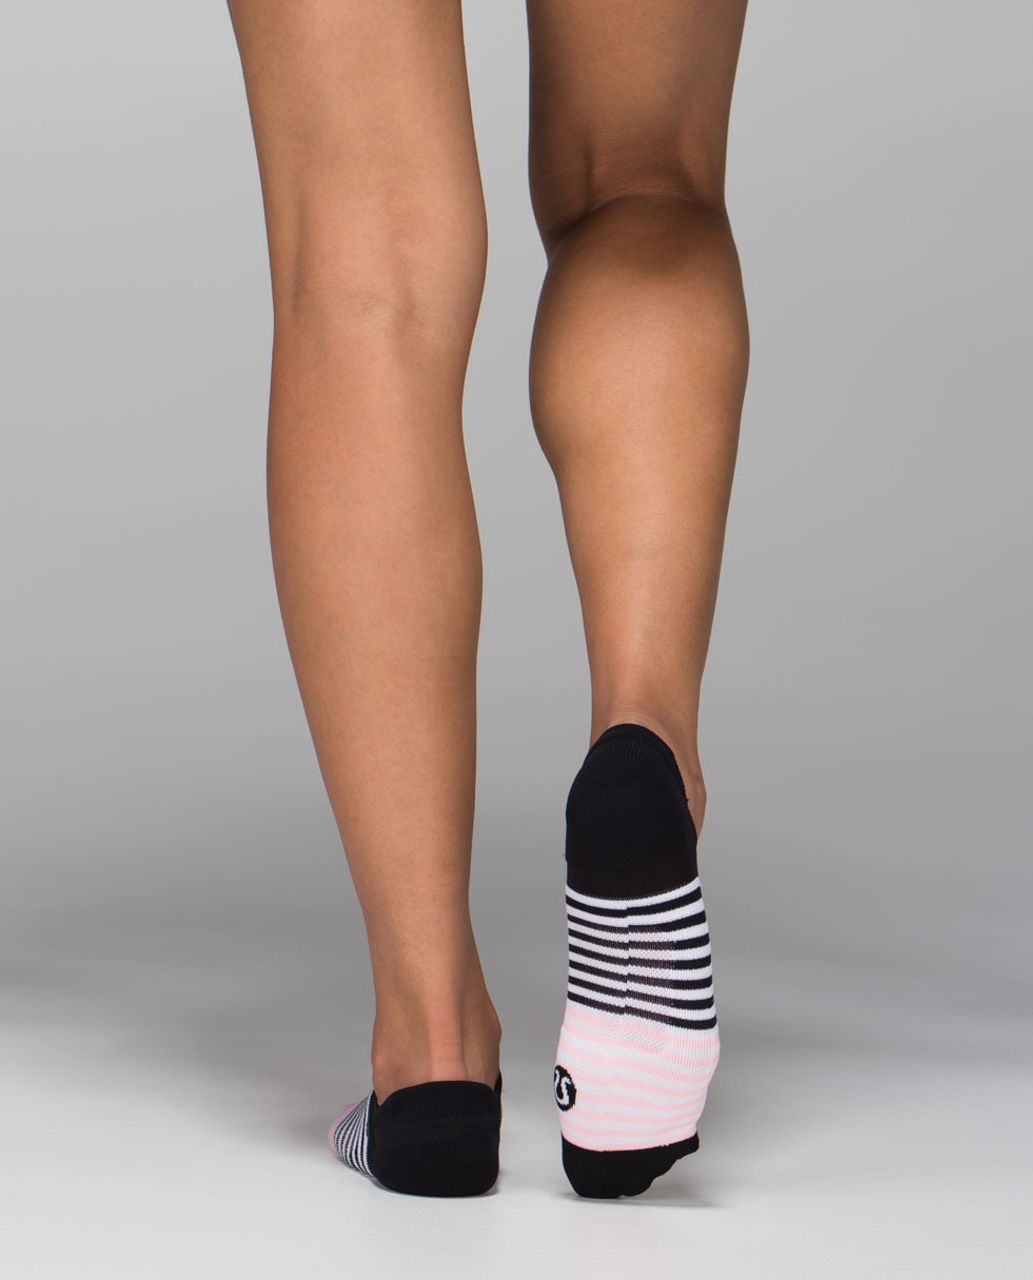 Lululemon Women's Ultimate No Show Run Sock *Ergo Toes - 4x4 Stripe Black